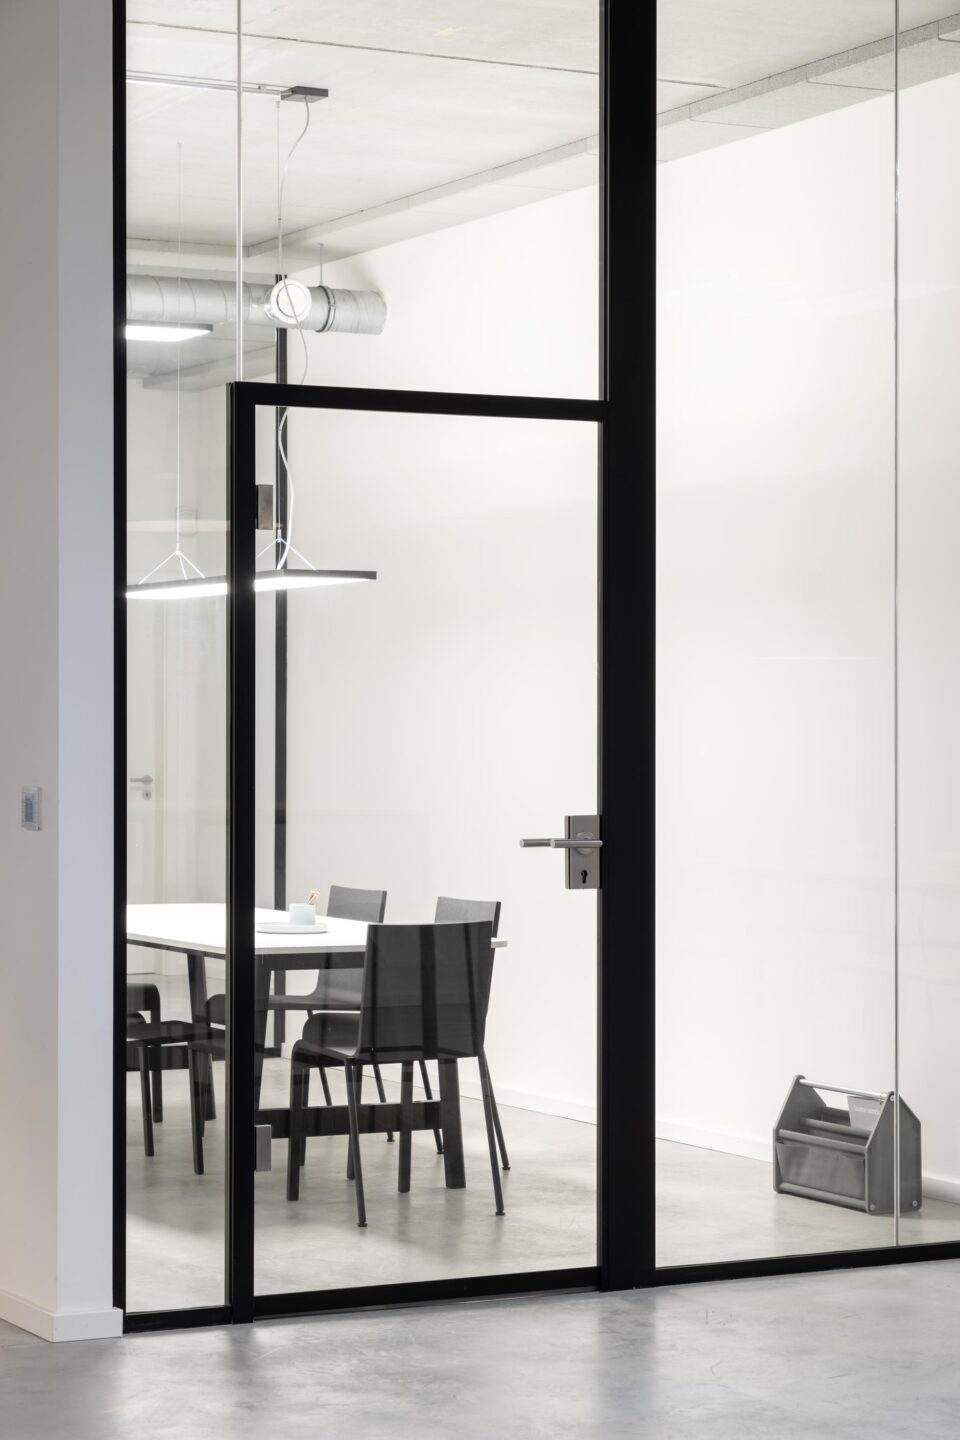 Bechtold Solartechnik │ ergonomic workstation │ office furniture